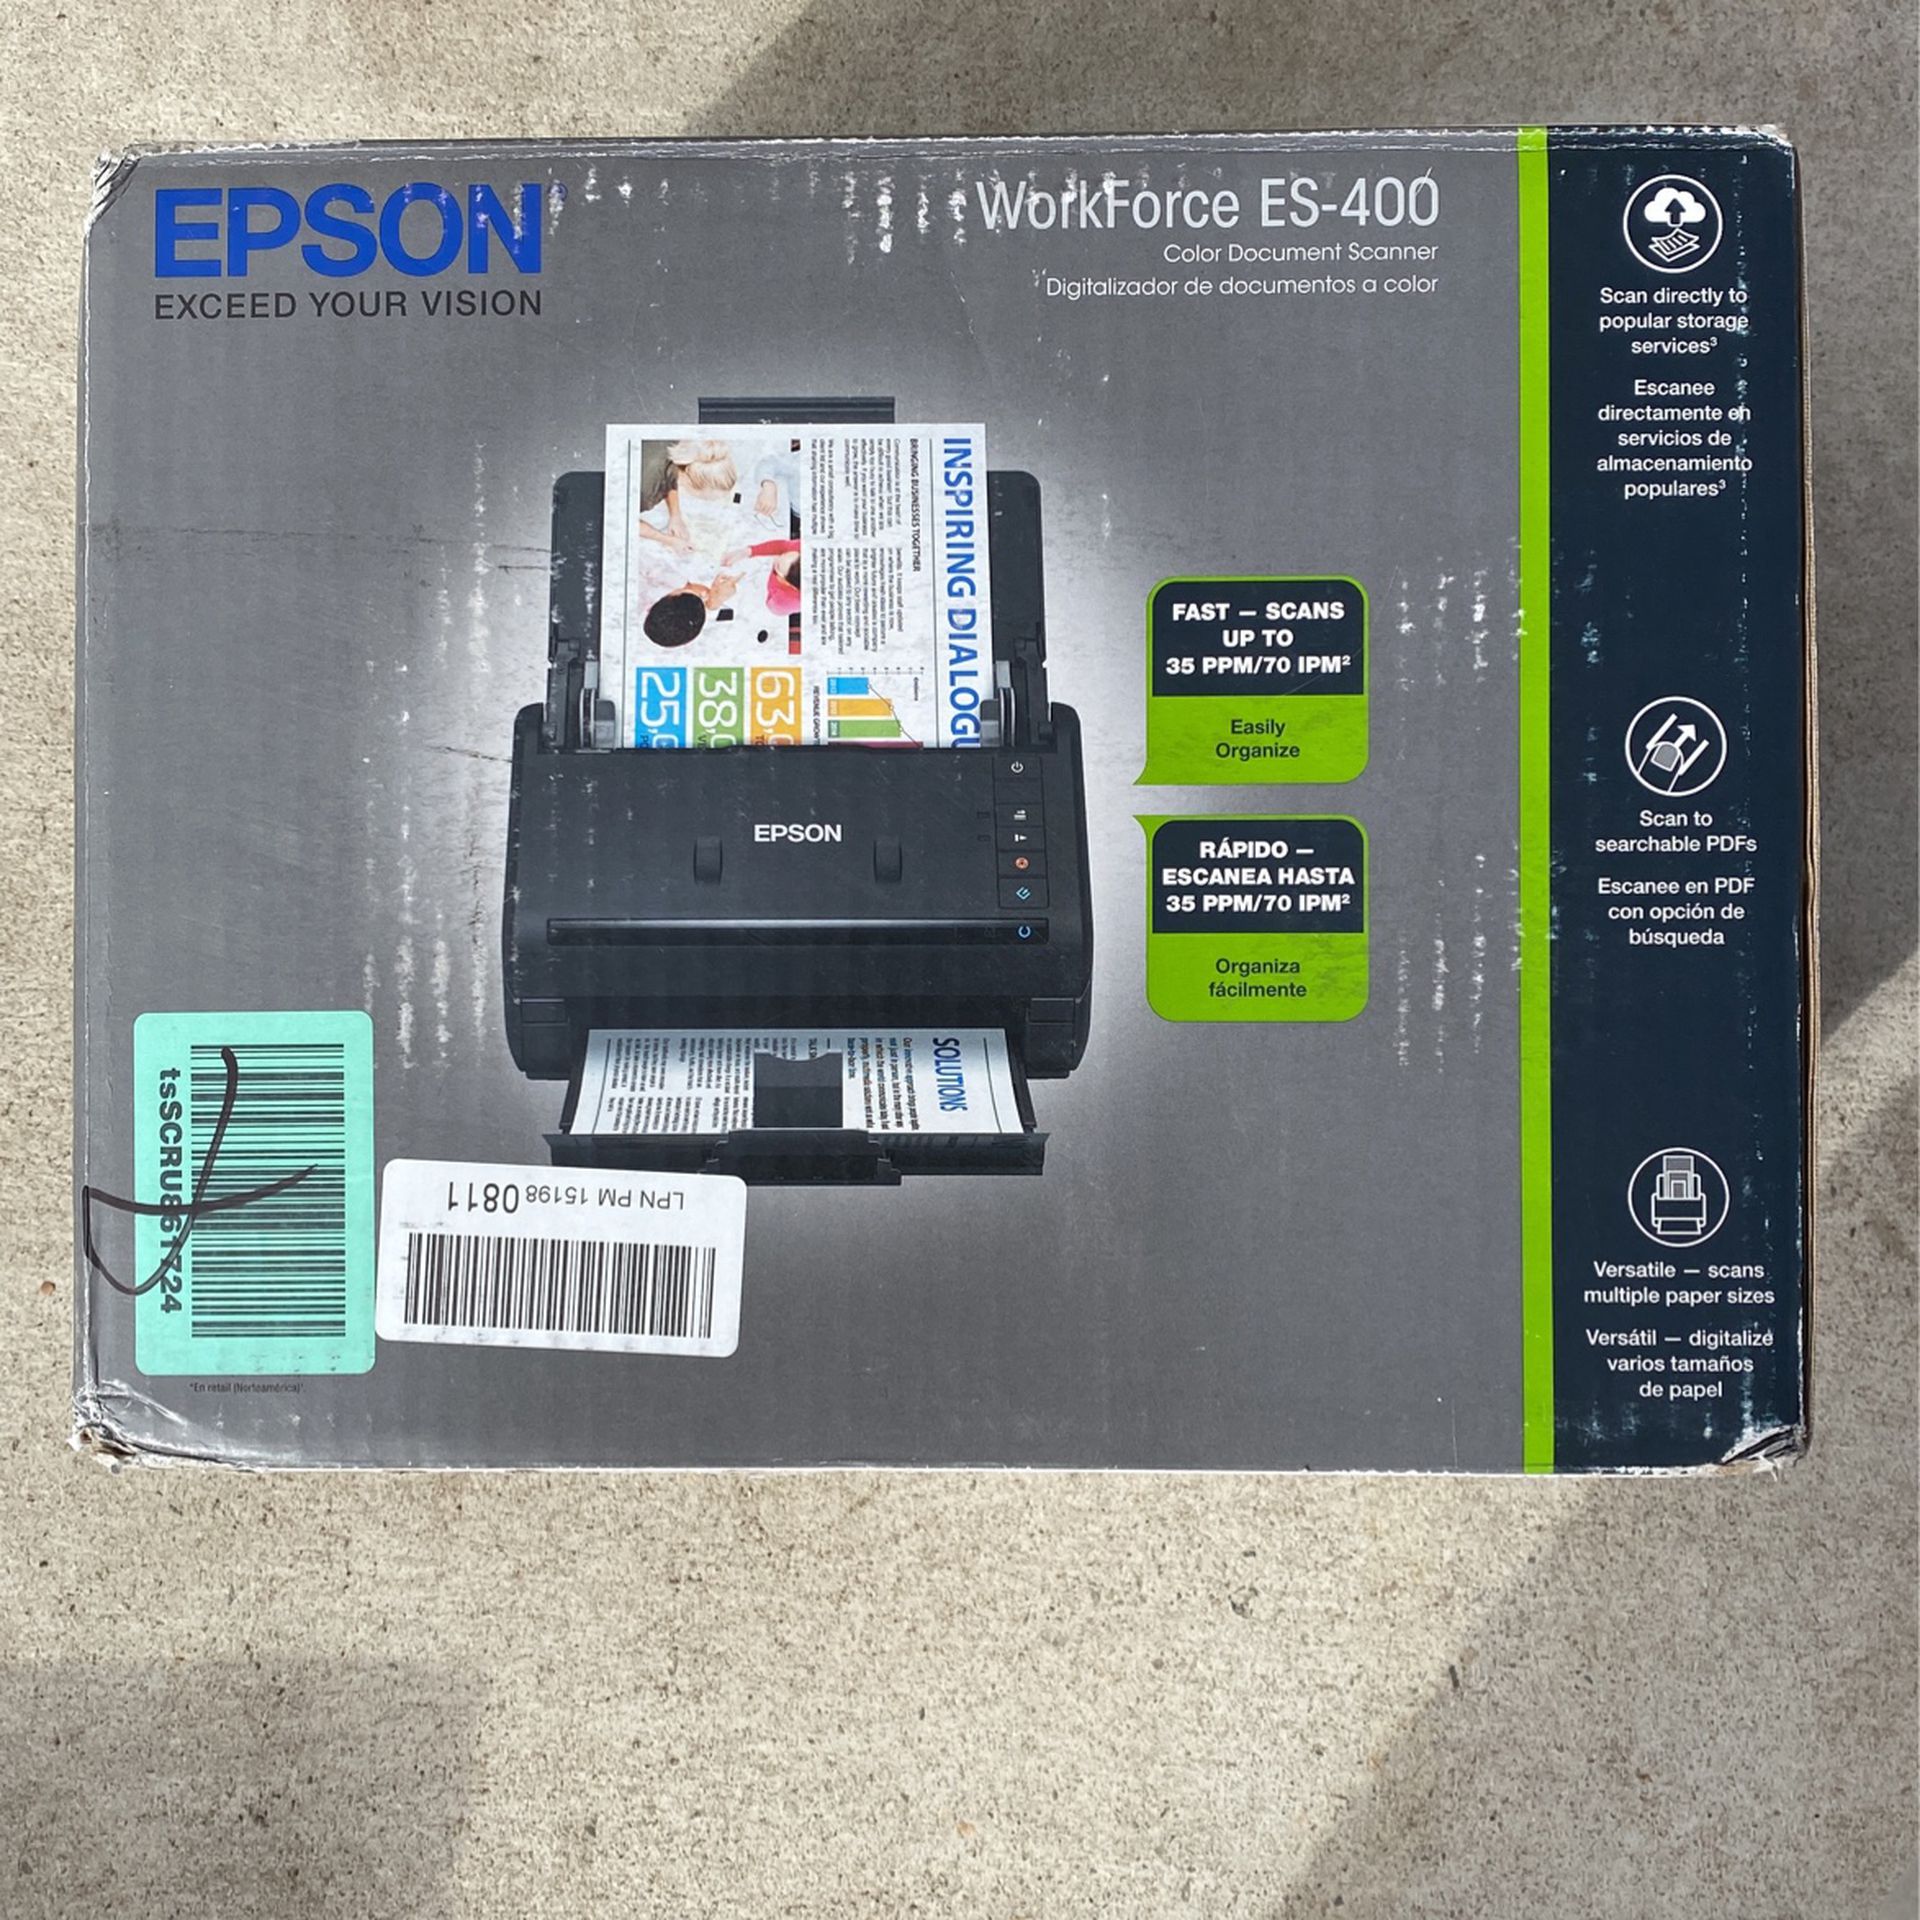 Epson exceed your vision printer workforce ES 400